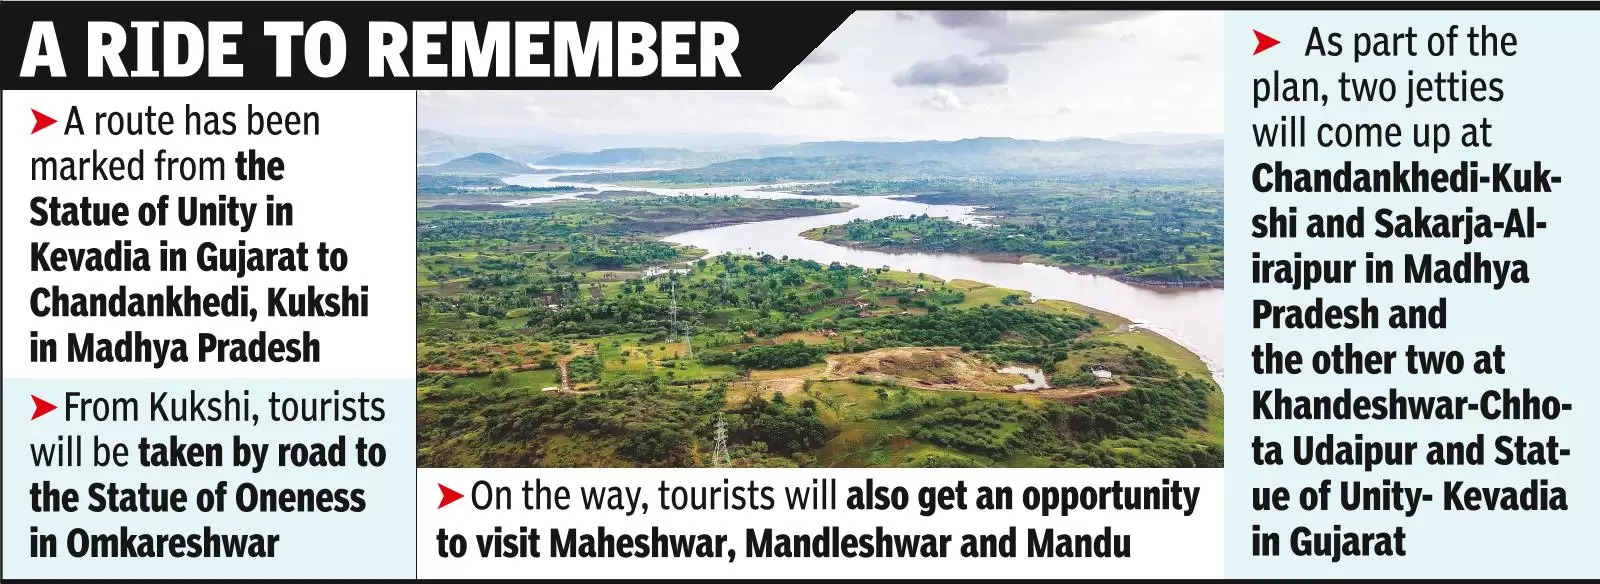 From MP to Guj, 120-km cruise ride on Narmada